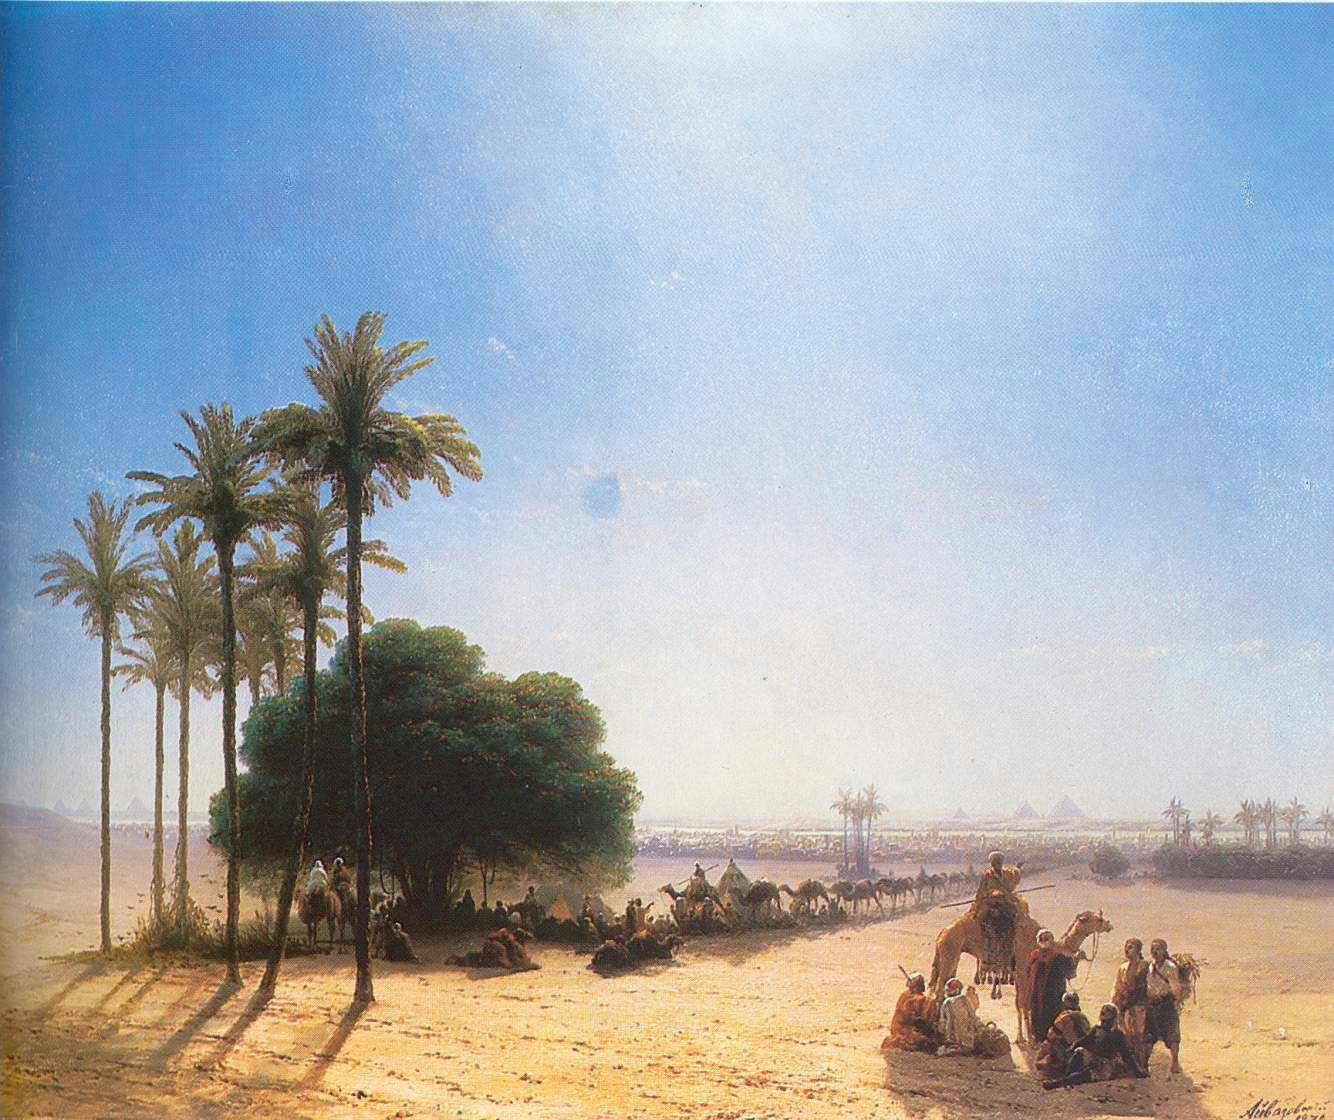 Caravan in the oasis. Egypt (1871).